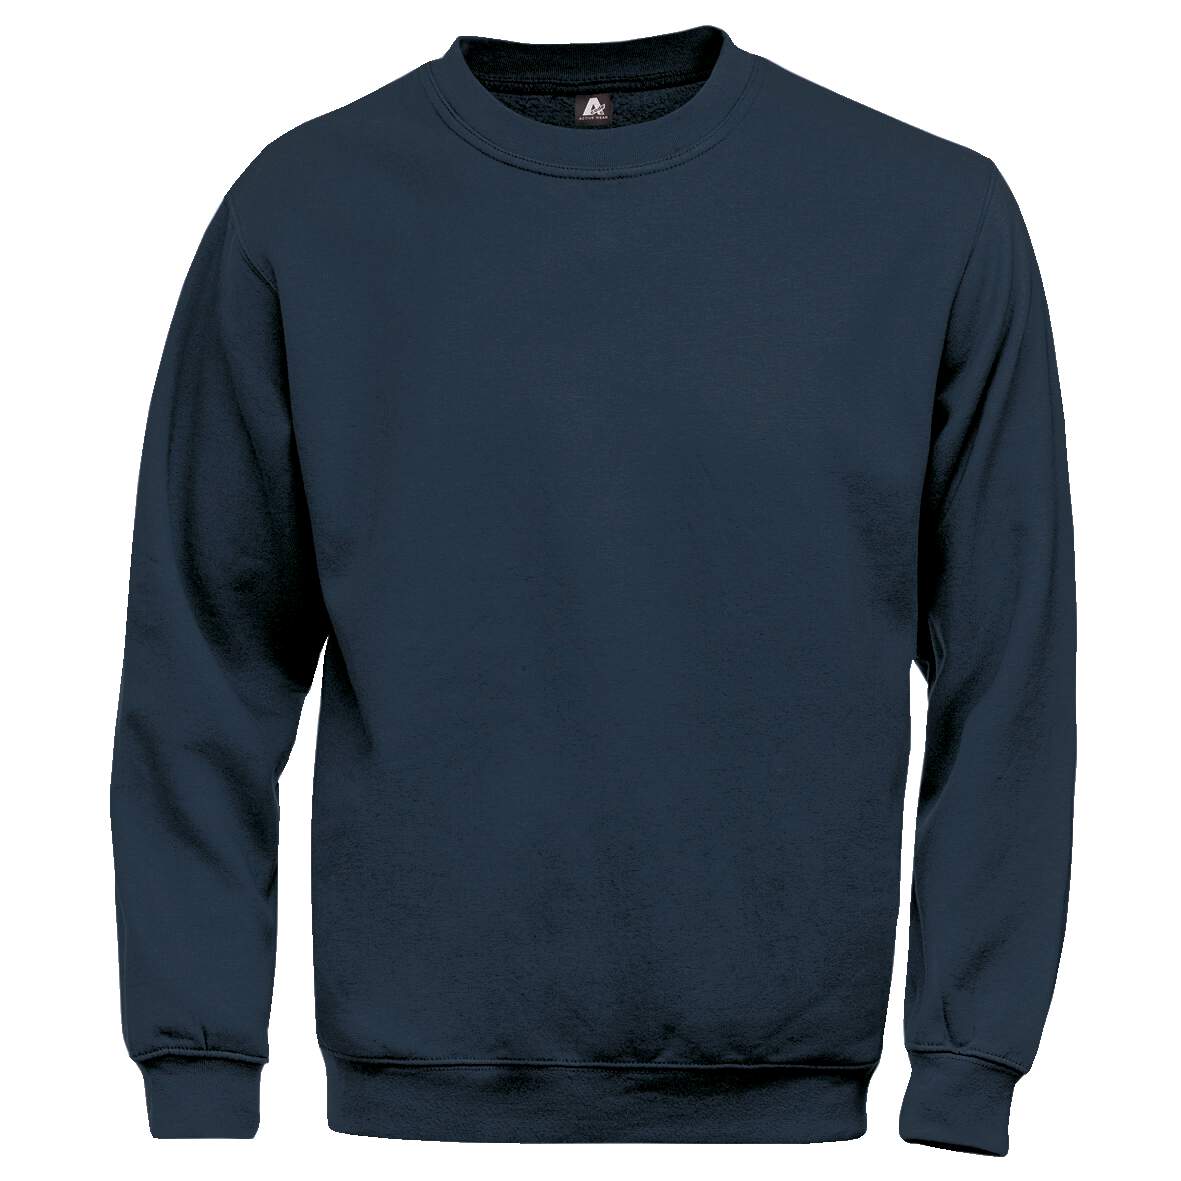 1181248 - Sweatshirt marine 100225